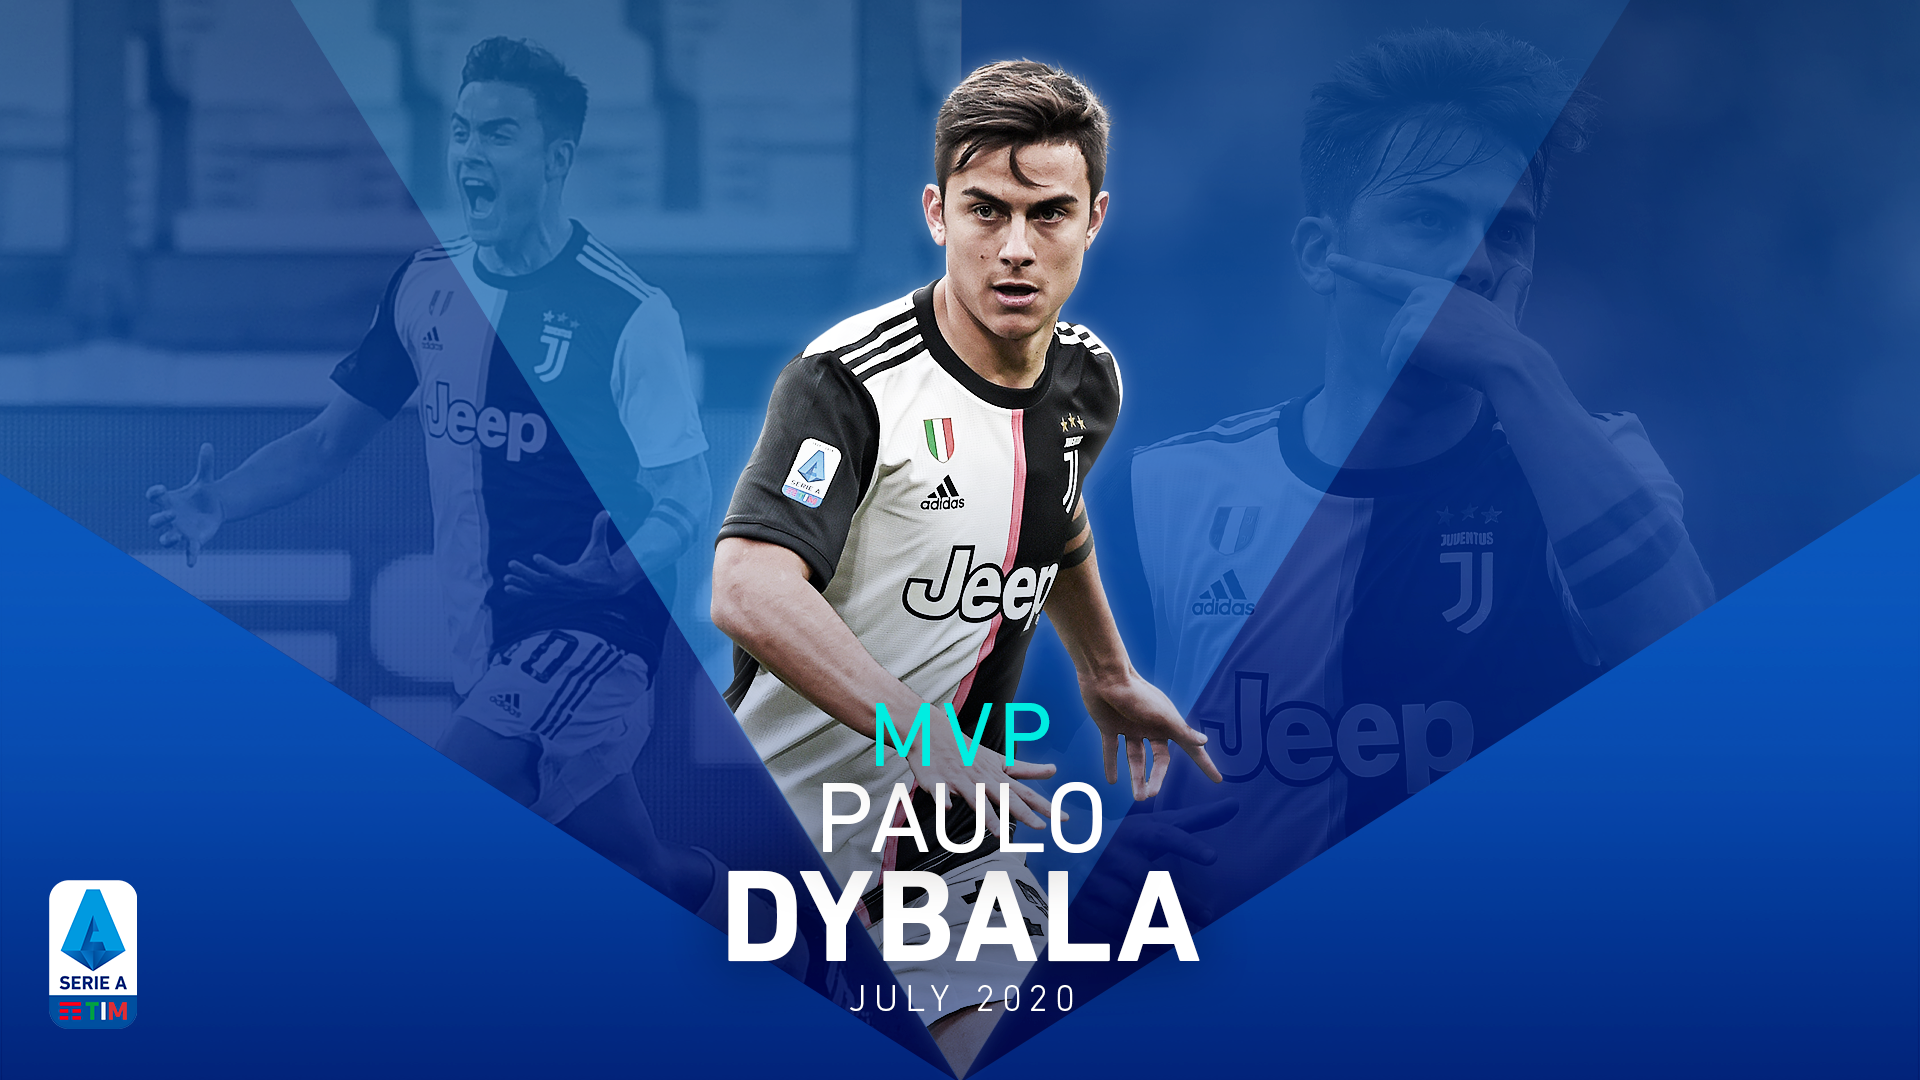 PAULO DYBALA MVP OF JULY. News. Lega Serie A